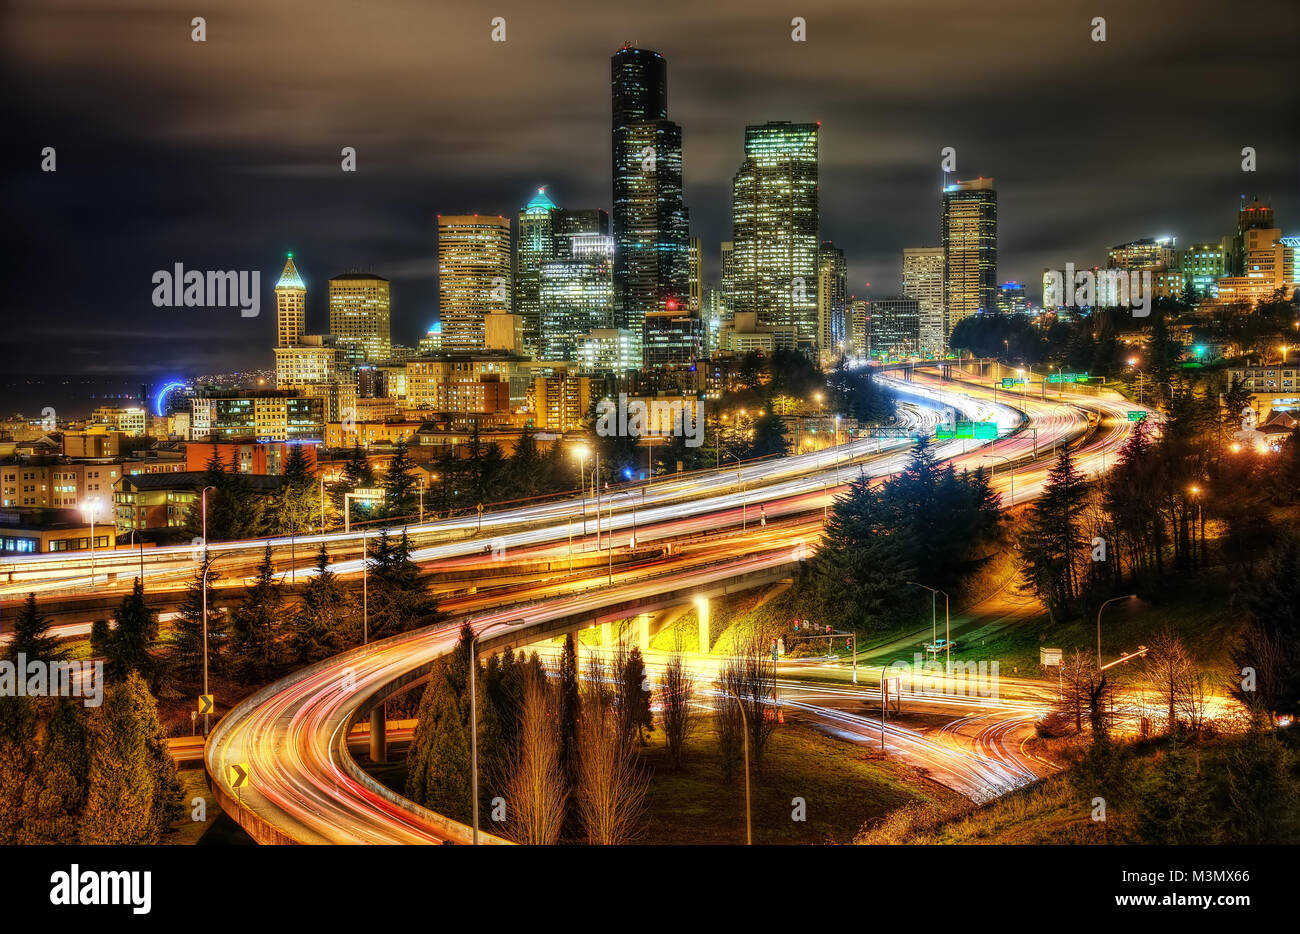 Seattle Highway Sunset taken in 2015 Stock Photo